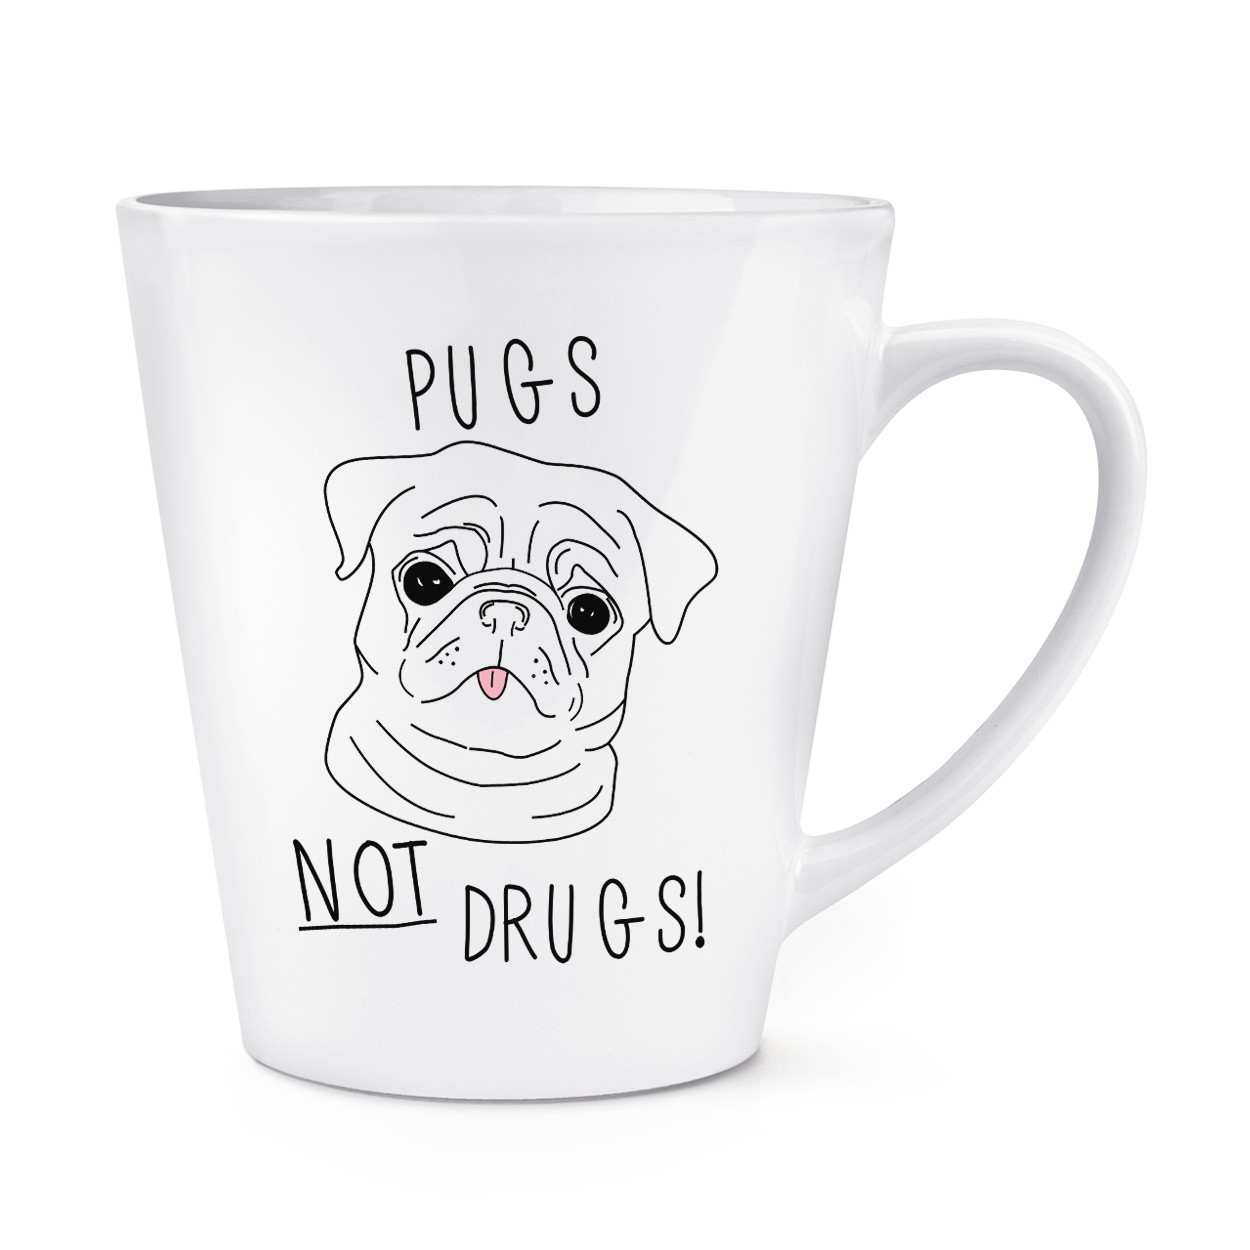 Pugs Not Drugs 12oz Latte Mug Cup